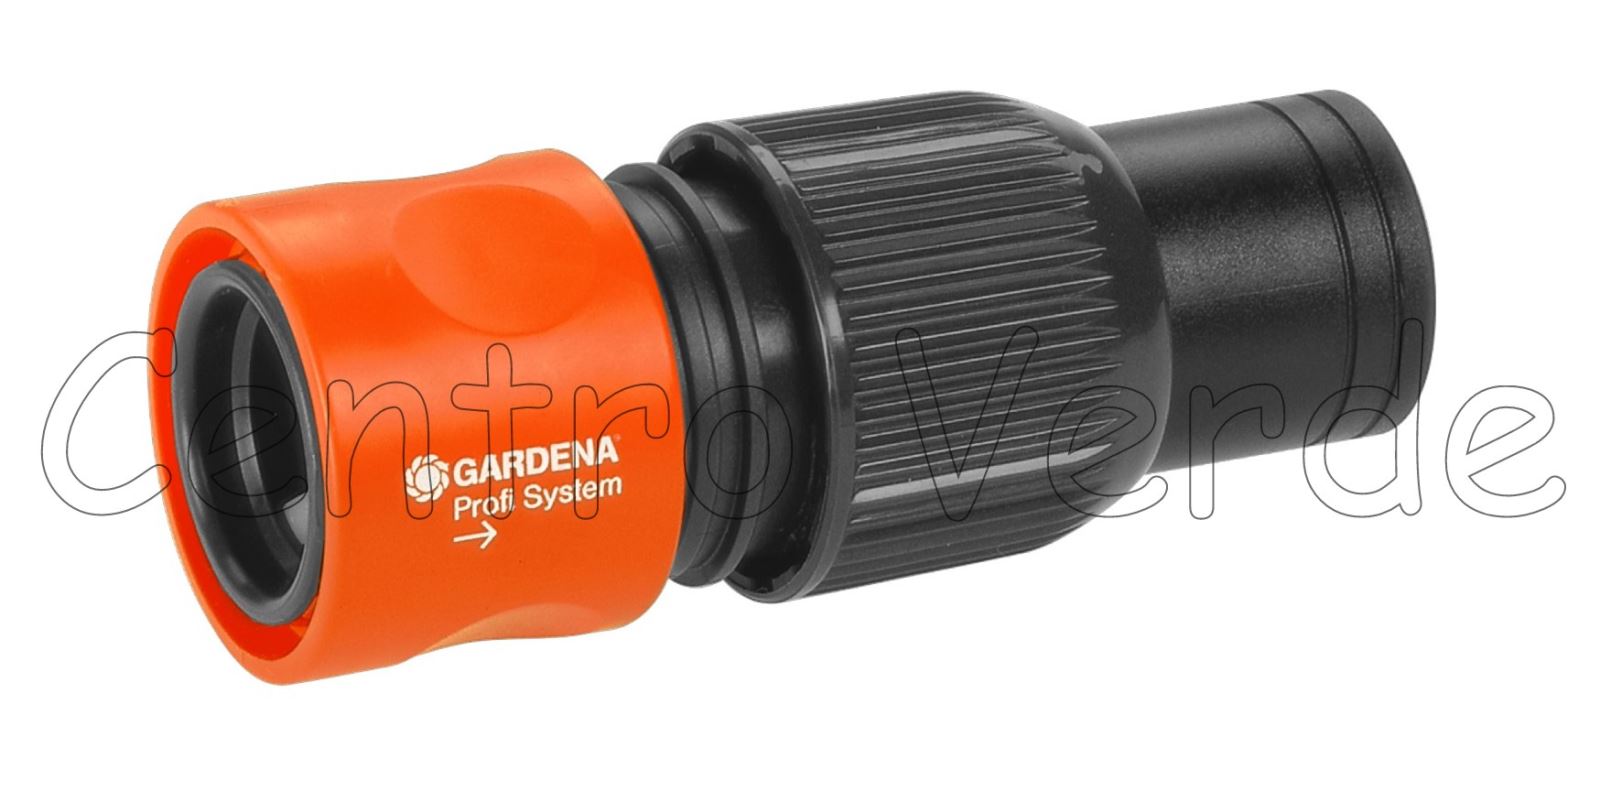 Raccordo Rapido Profi-System per tubi in gomma da 19 mm (3/4") GARDENA